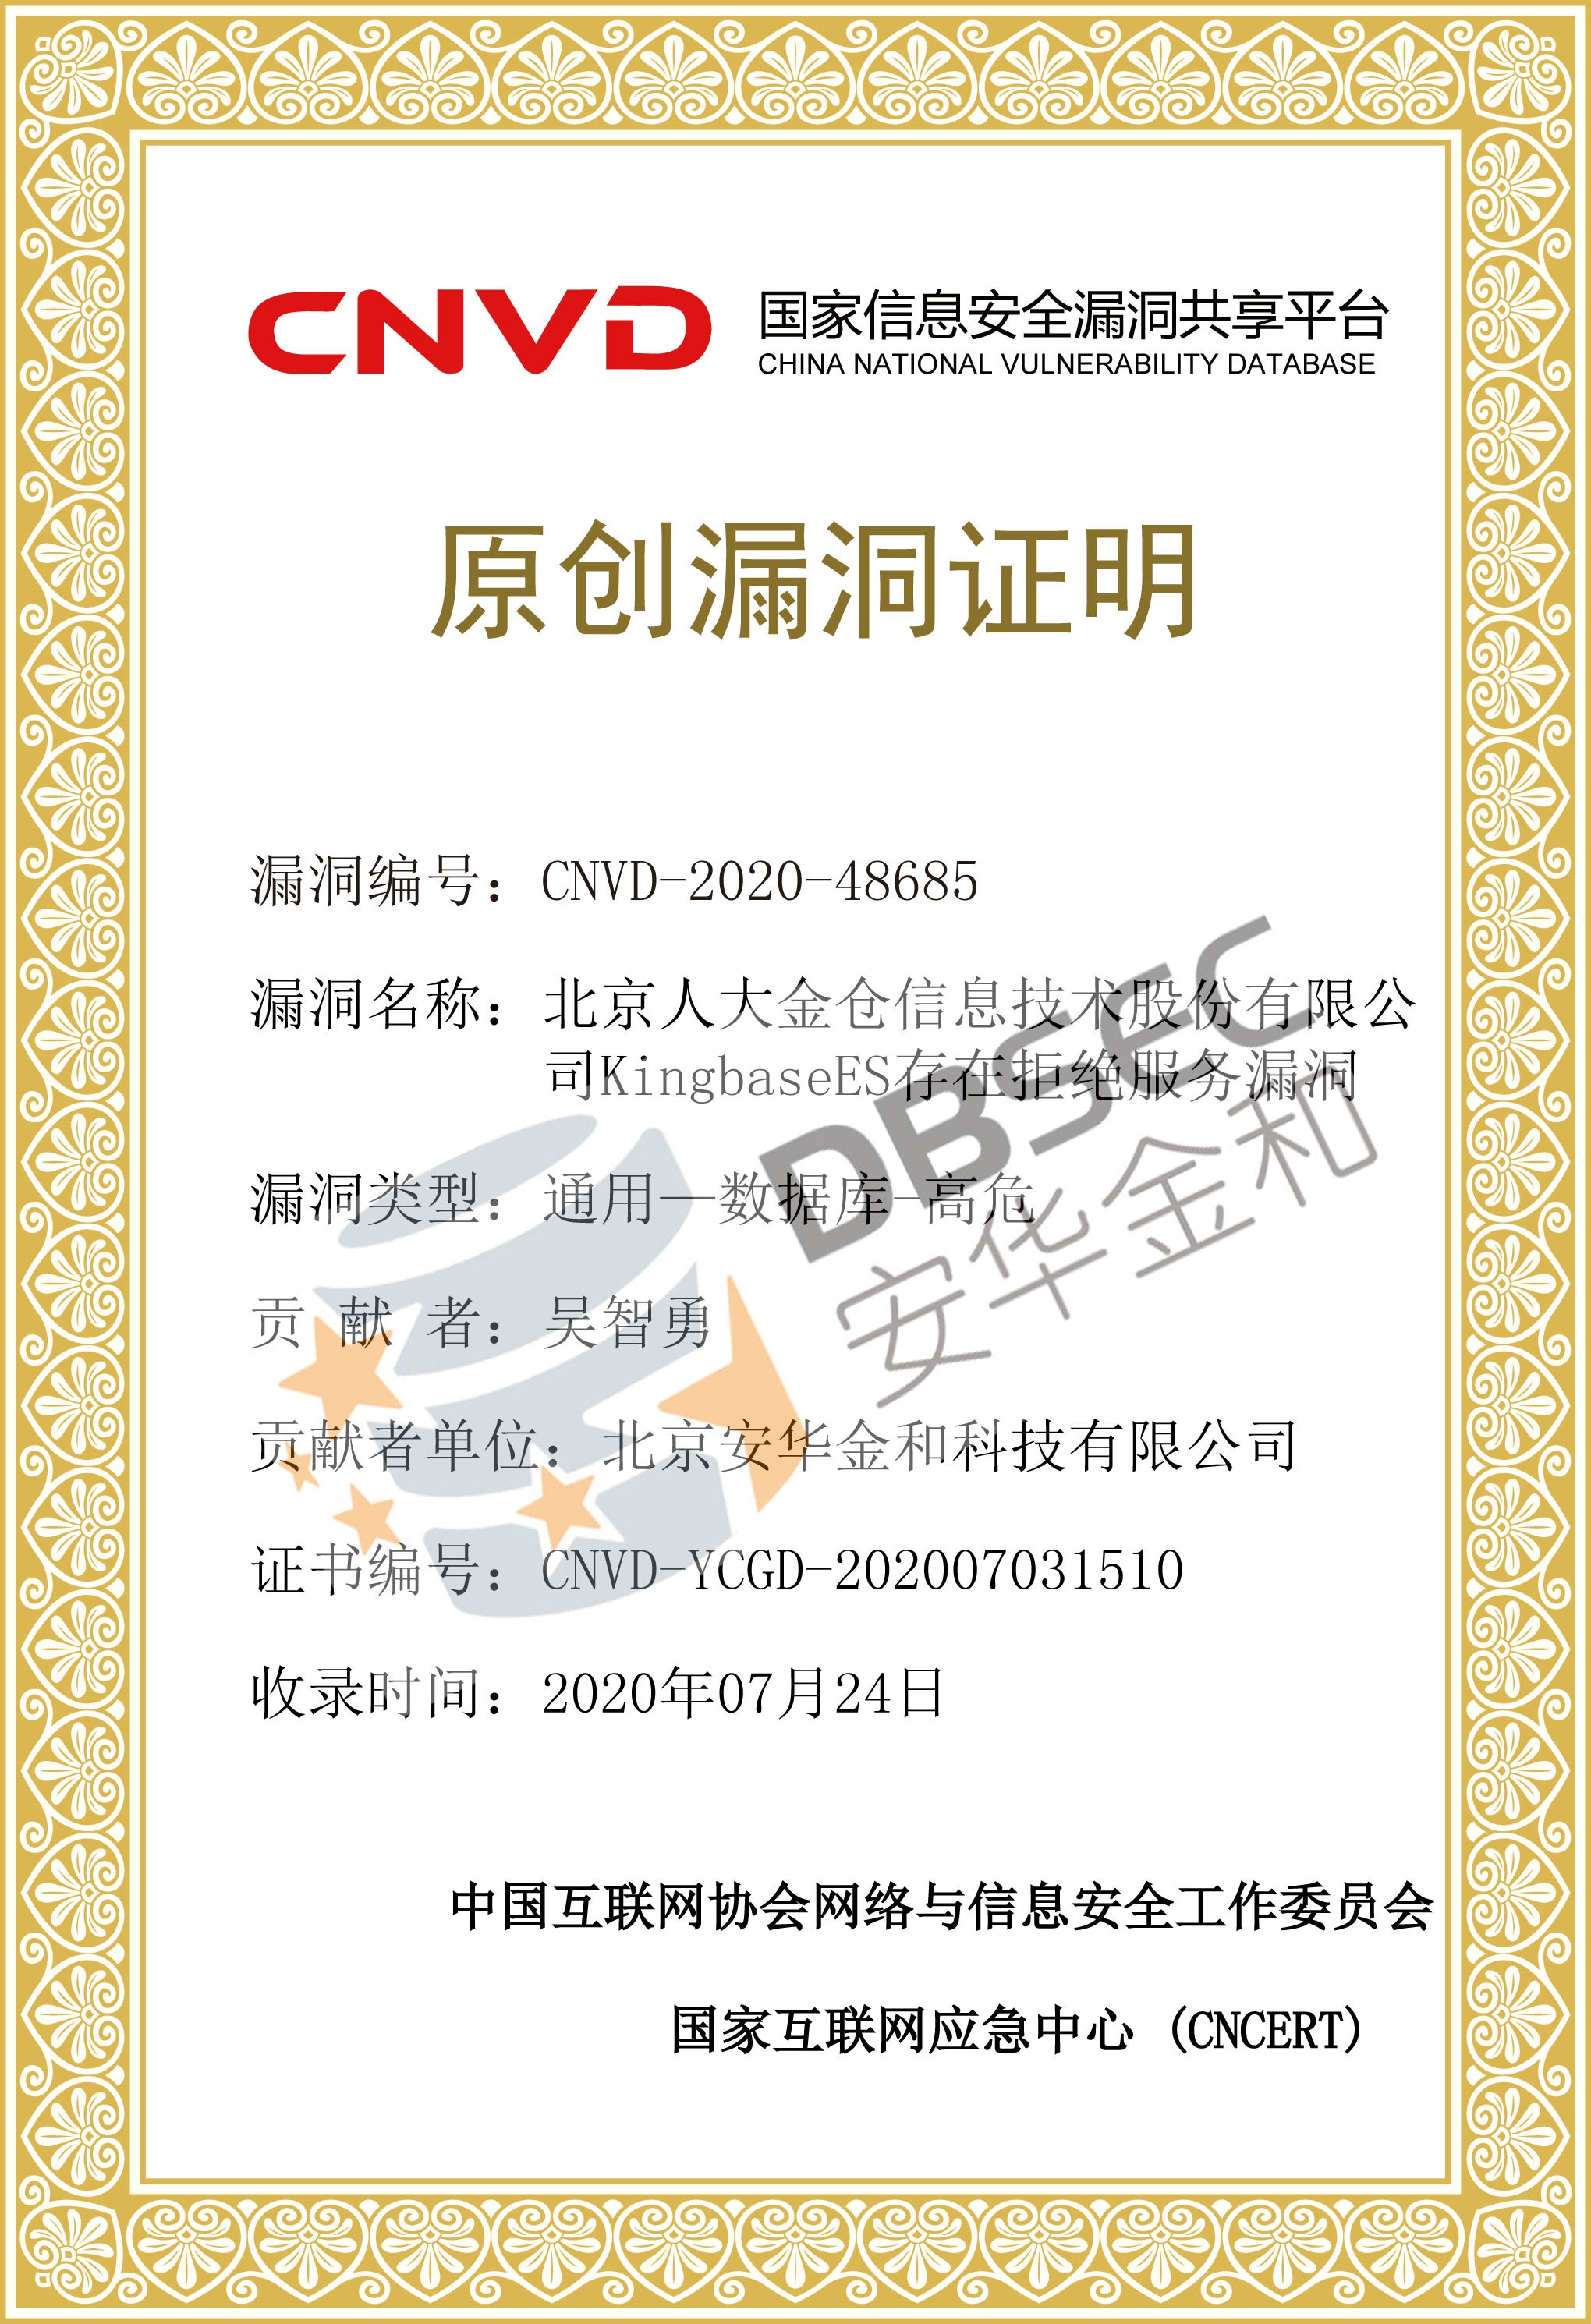 CNVD-YCGD-202007031510